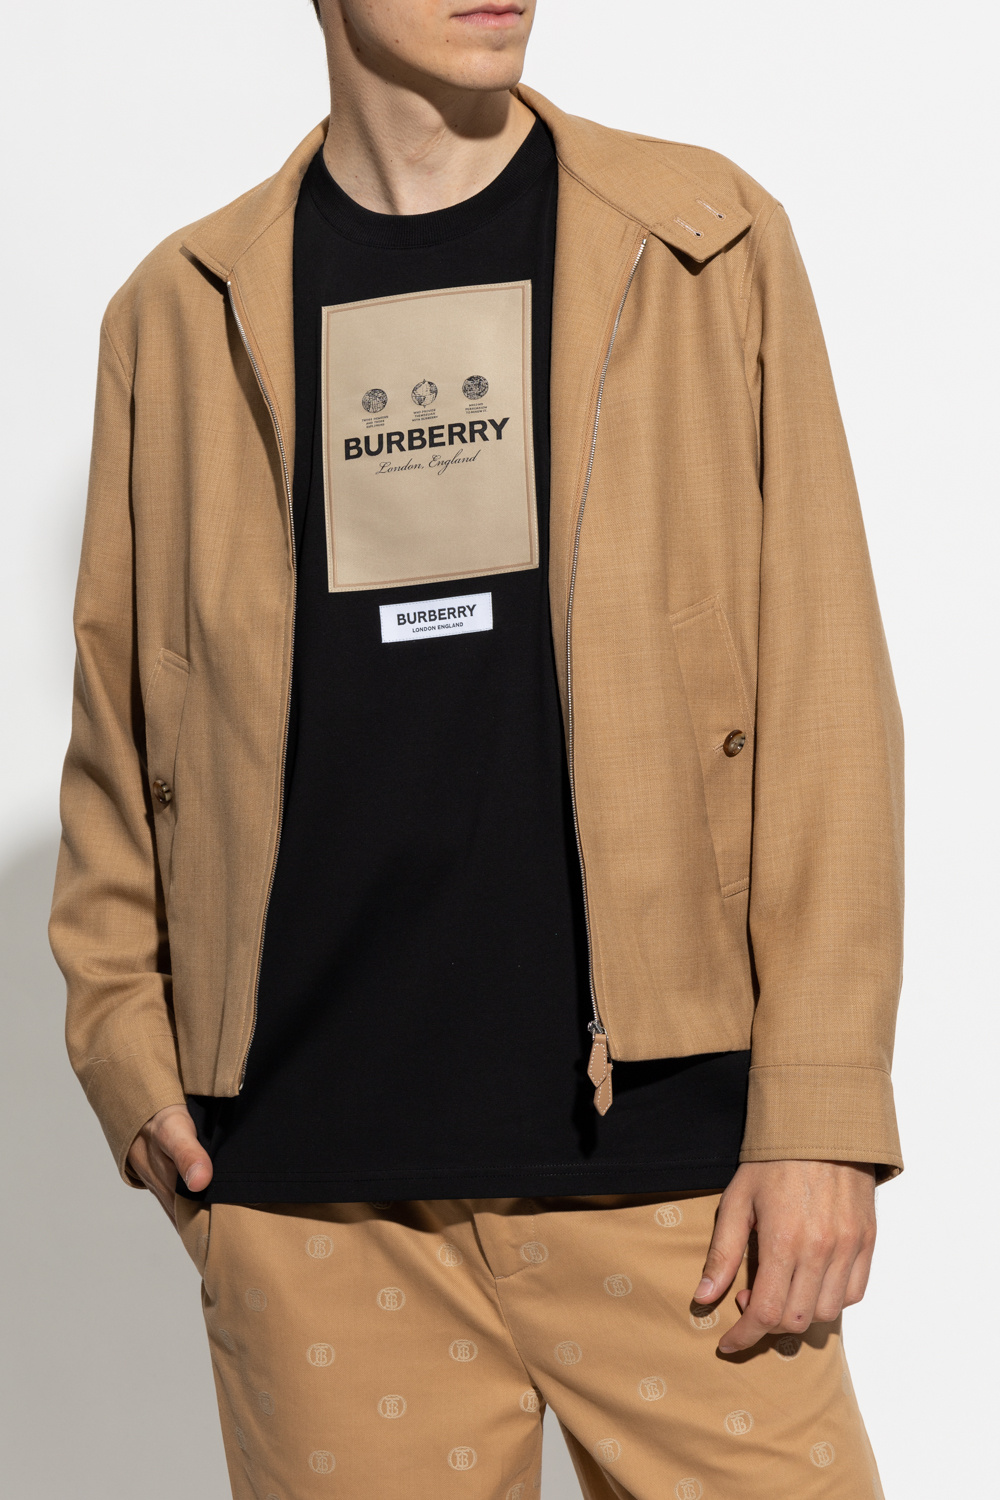 Burberry ‘Goldsmith’ jacket